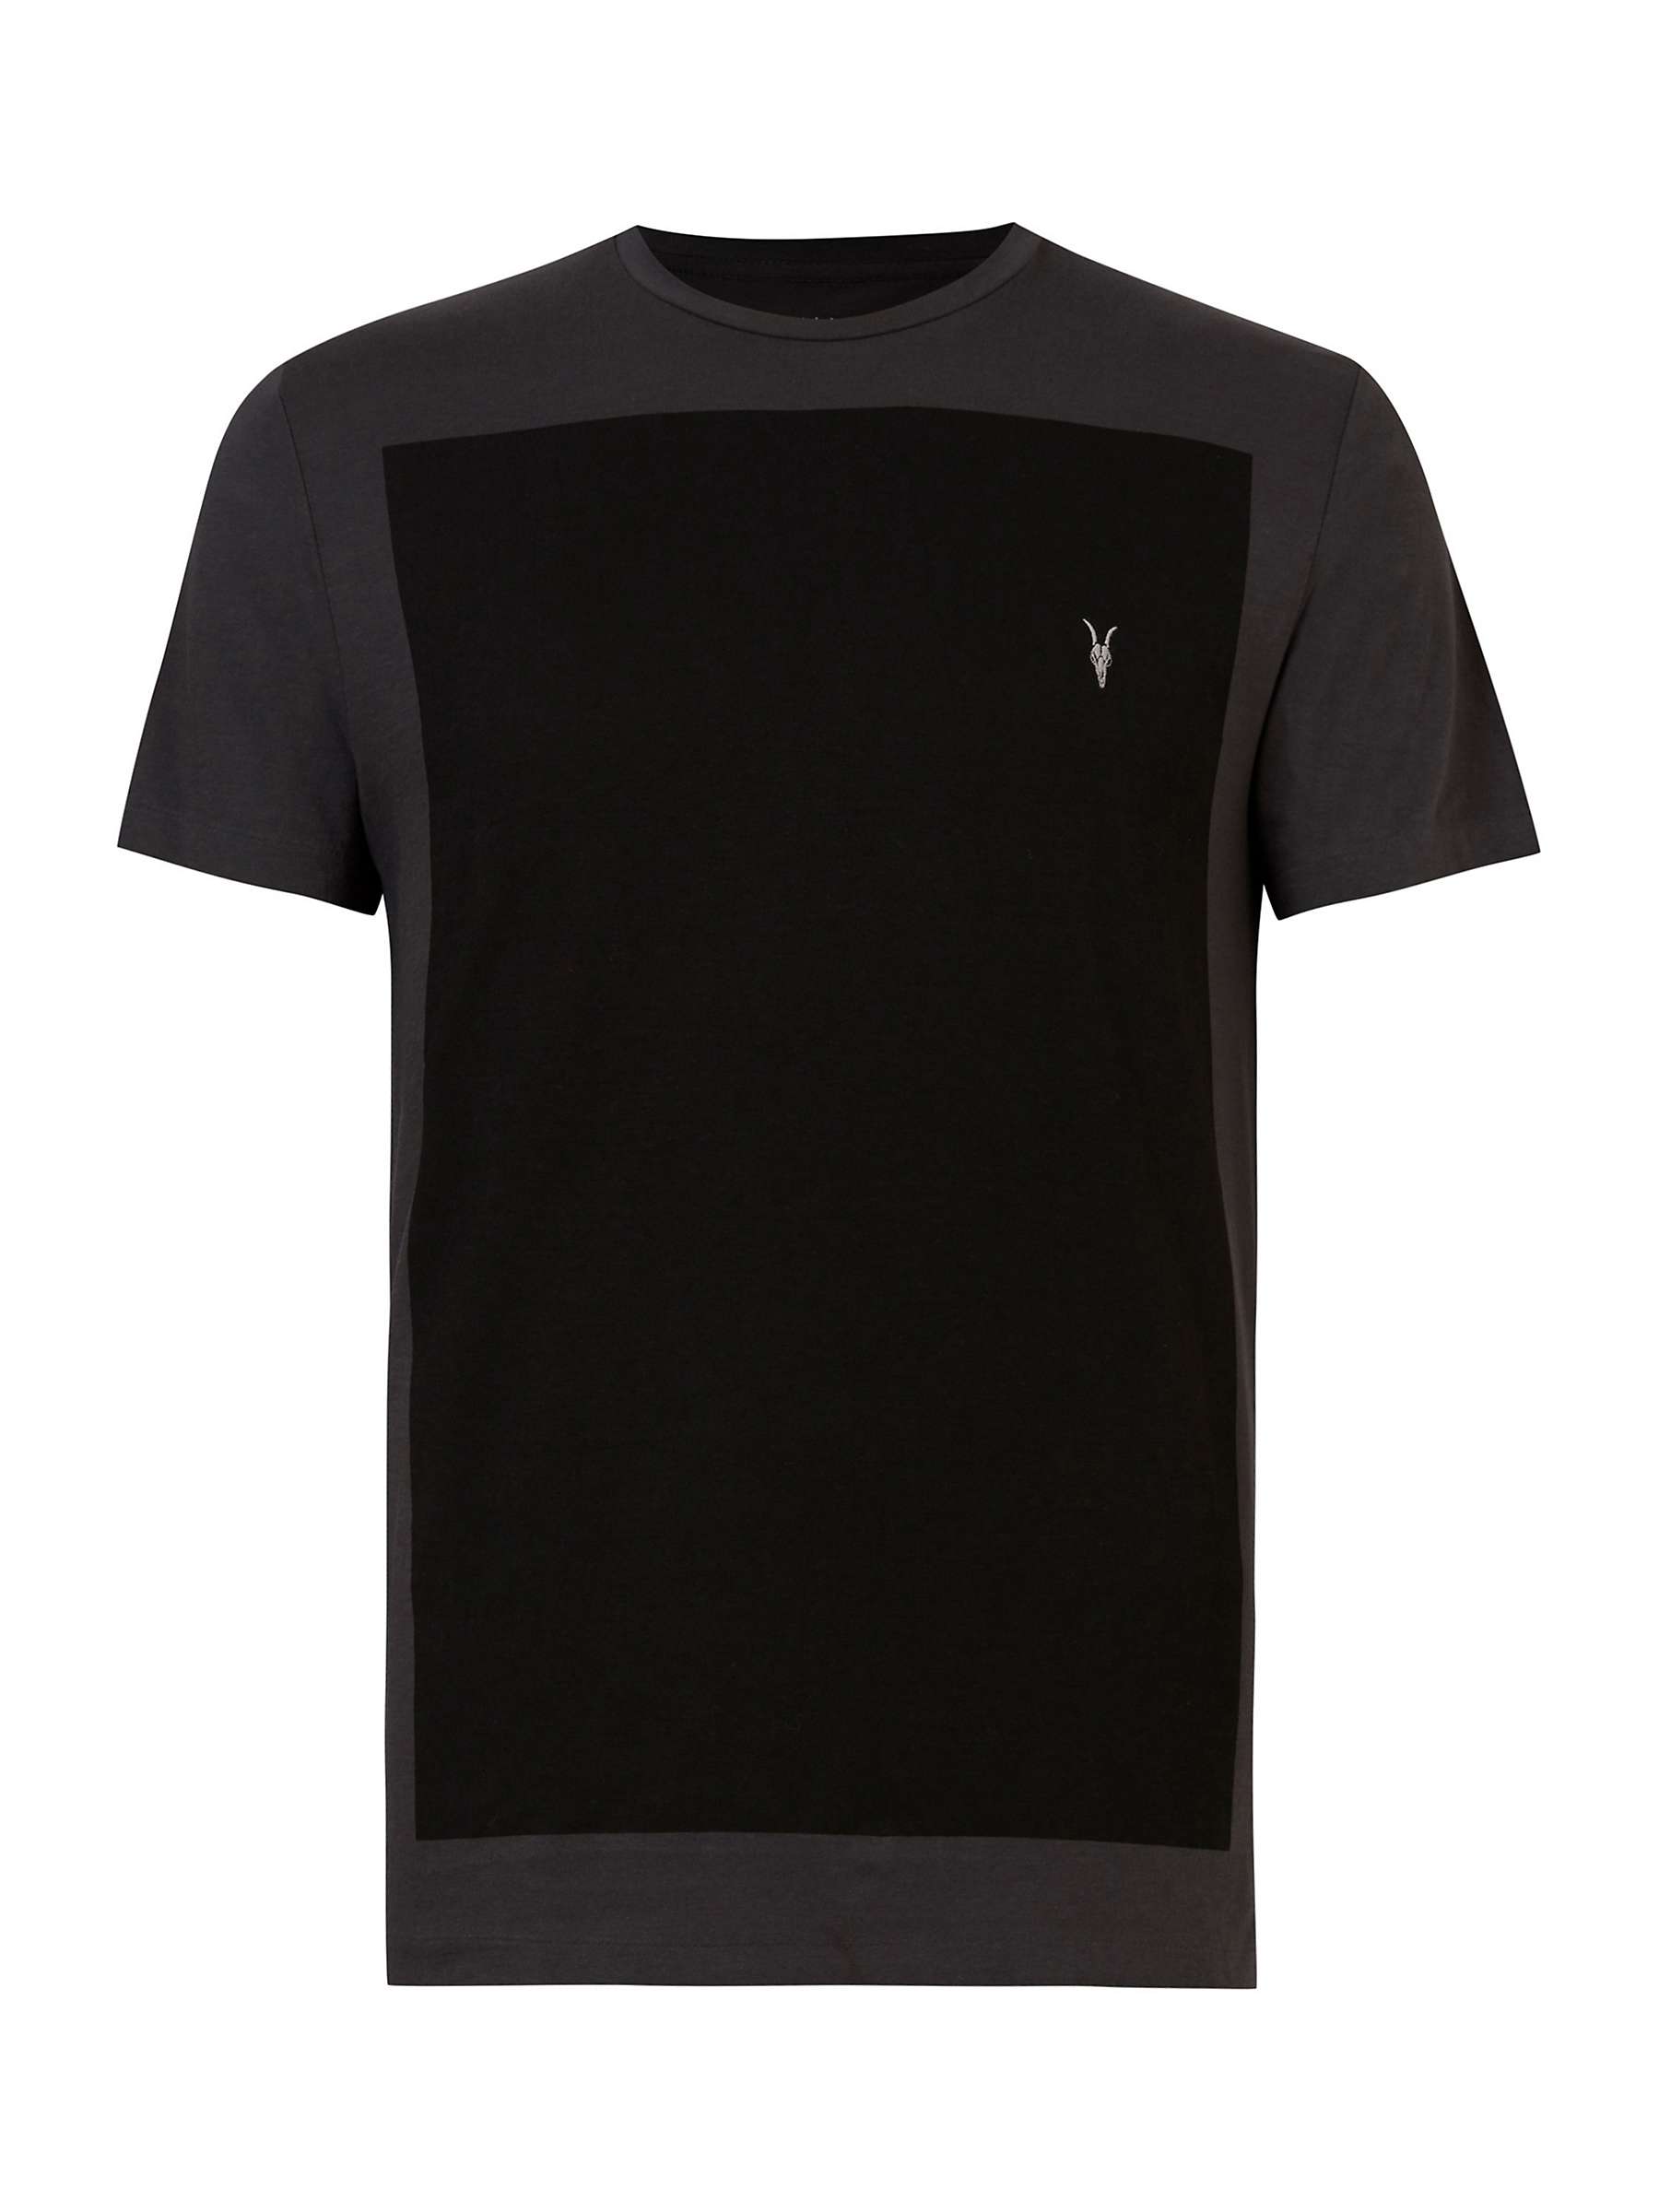 Buy AllSaints Lobke Colour Block T-Shirt, Washed Black/Jet Black Online at johnlewis.com